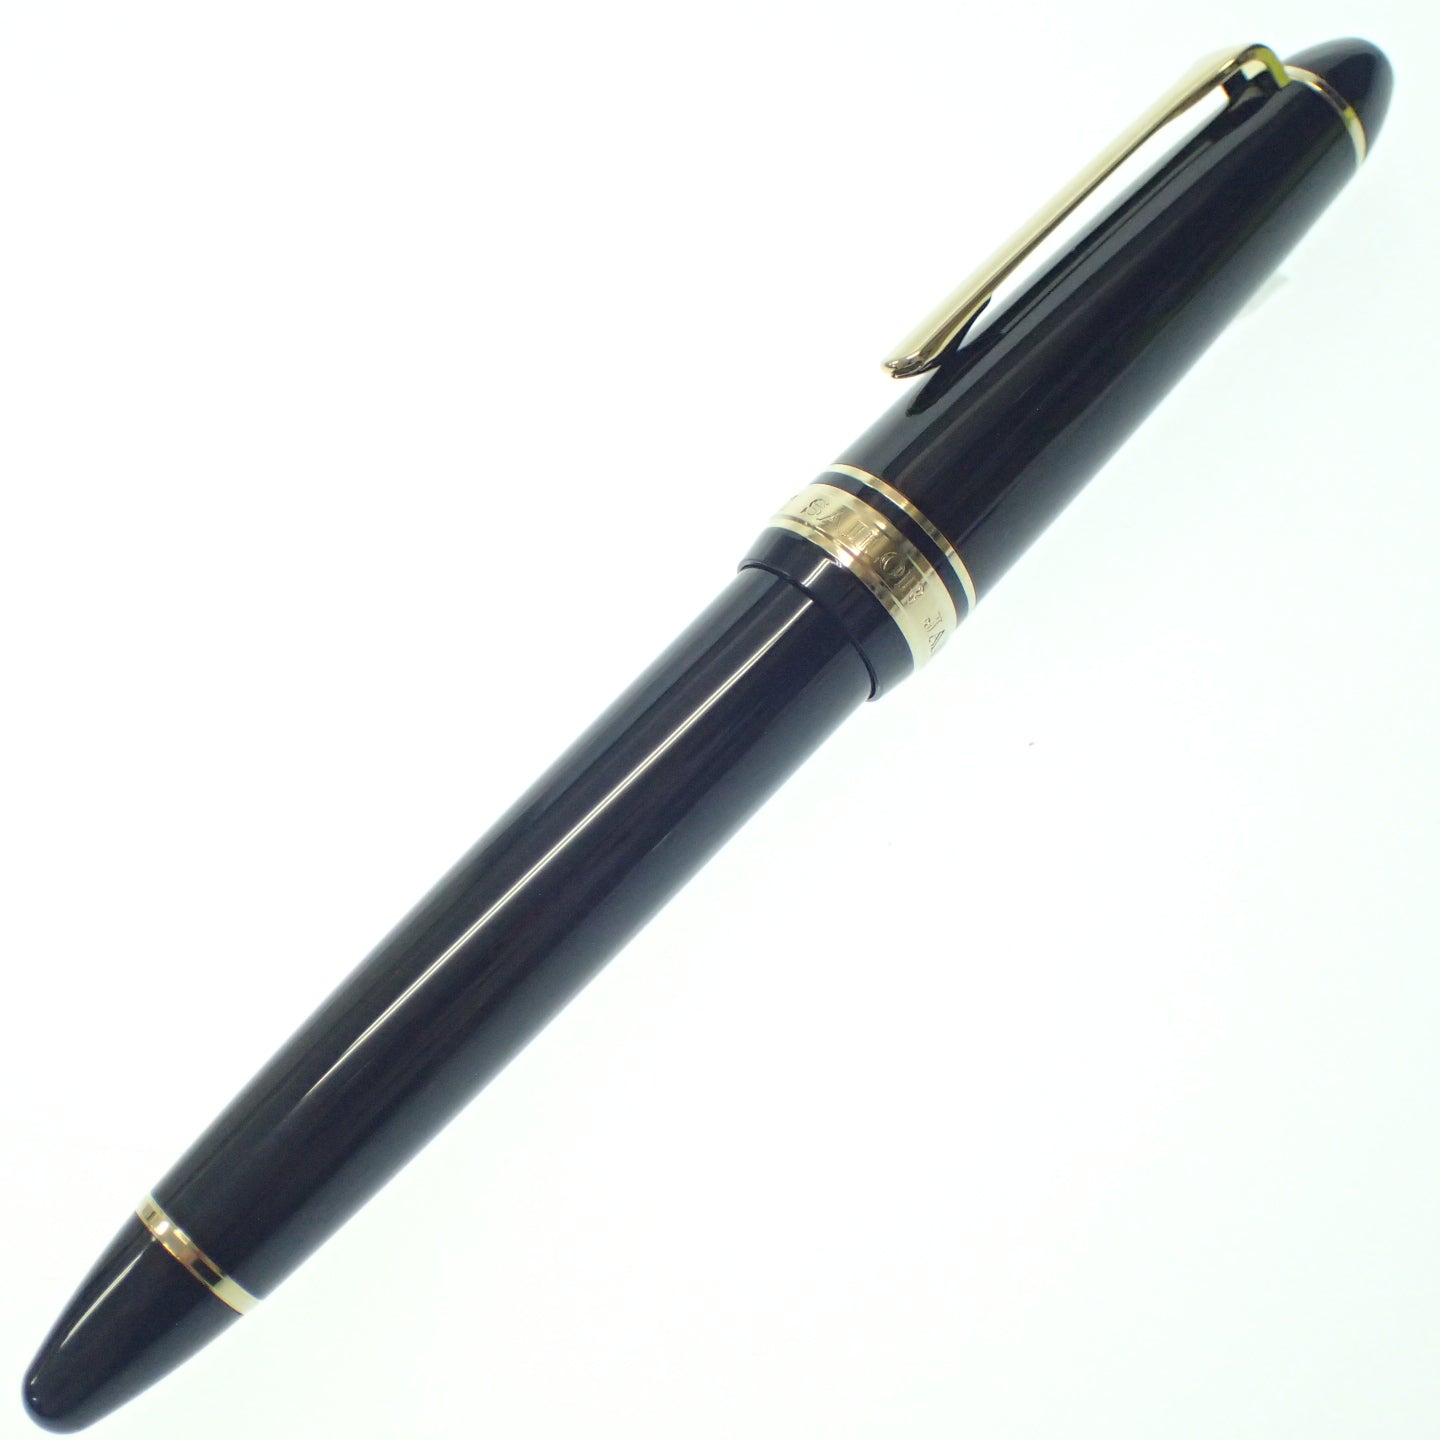 状况非常好 ◆ 水手钢笔成立 1911 年 金色 x 黑色 SAILOR [AFI5] 